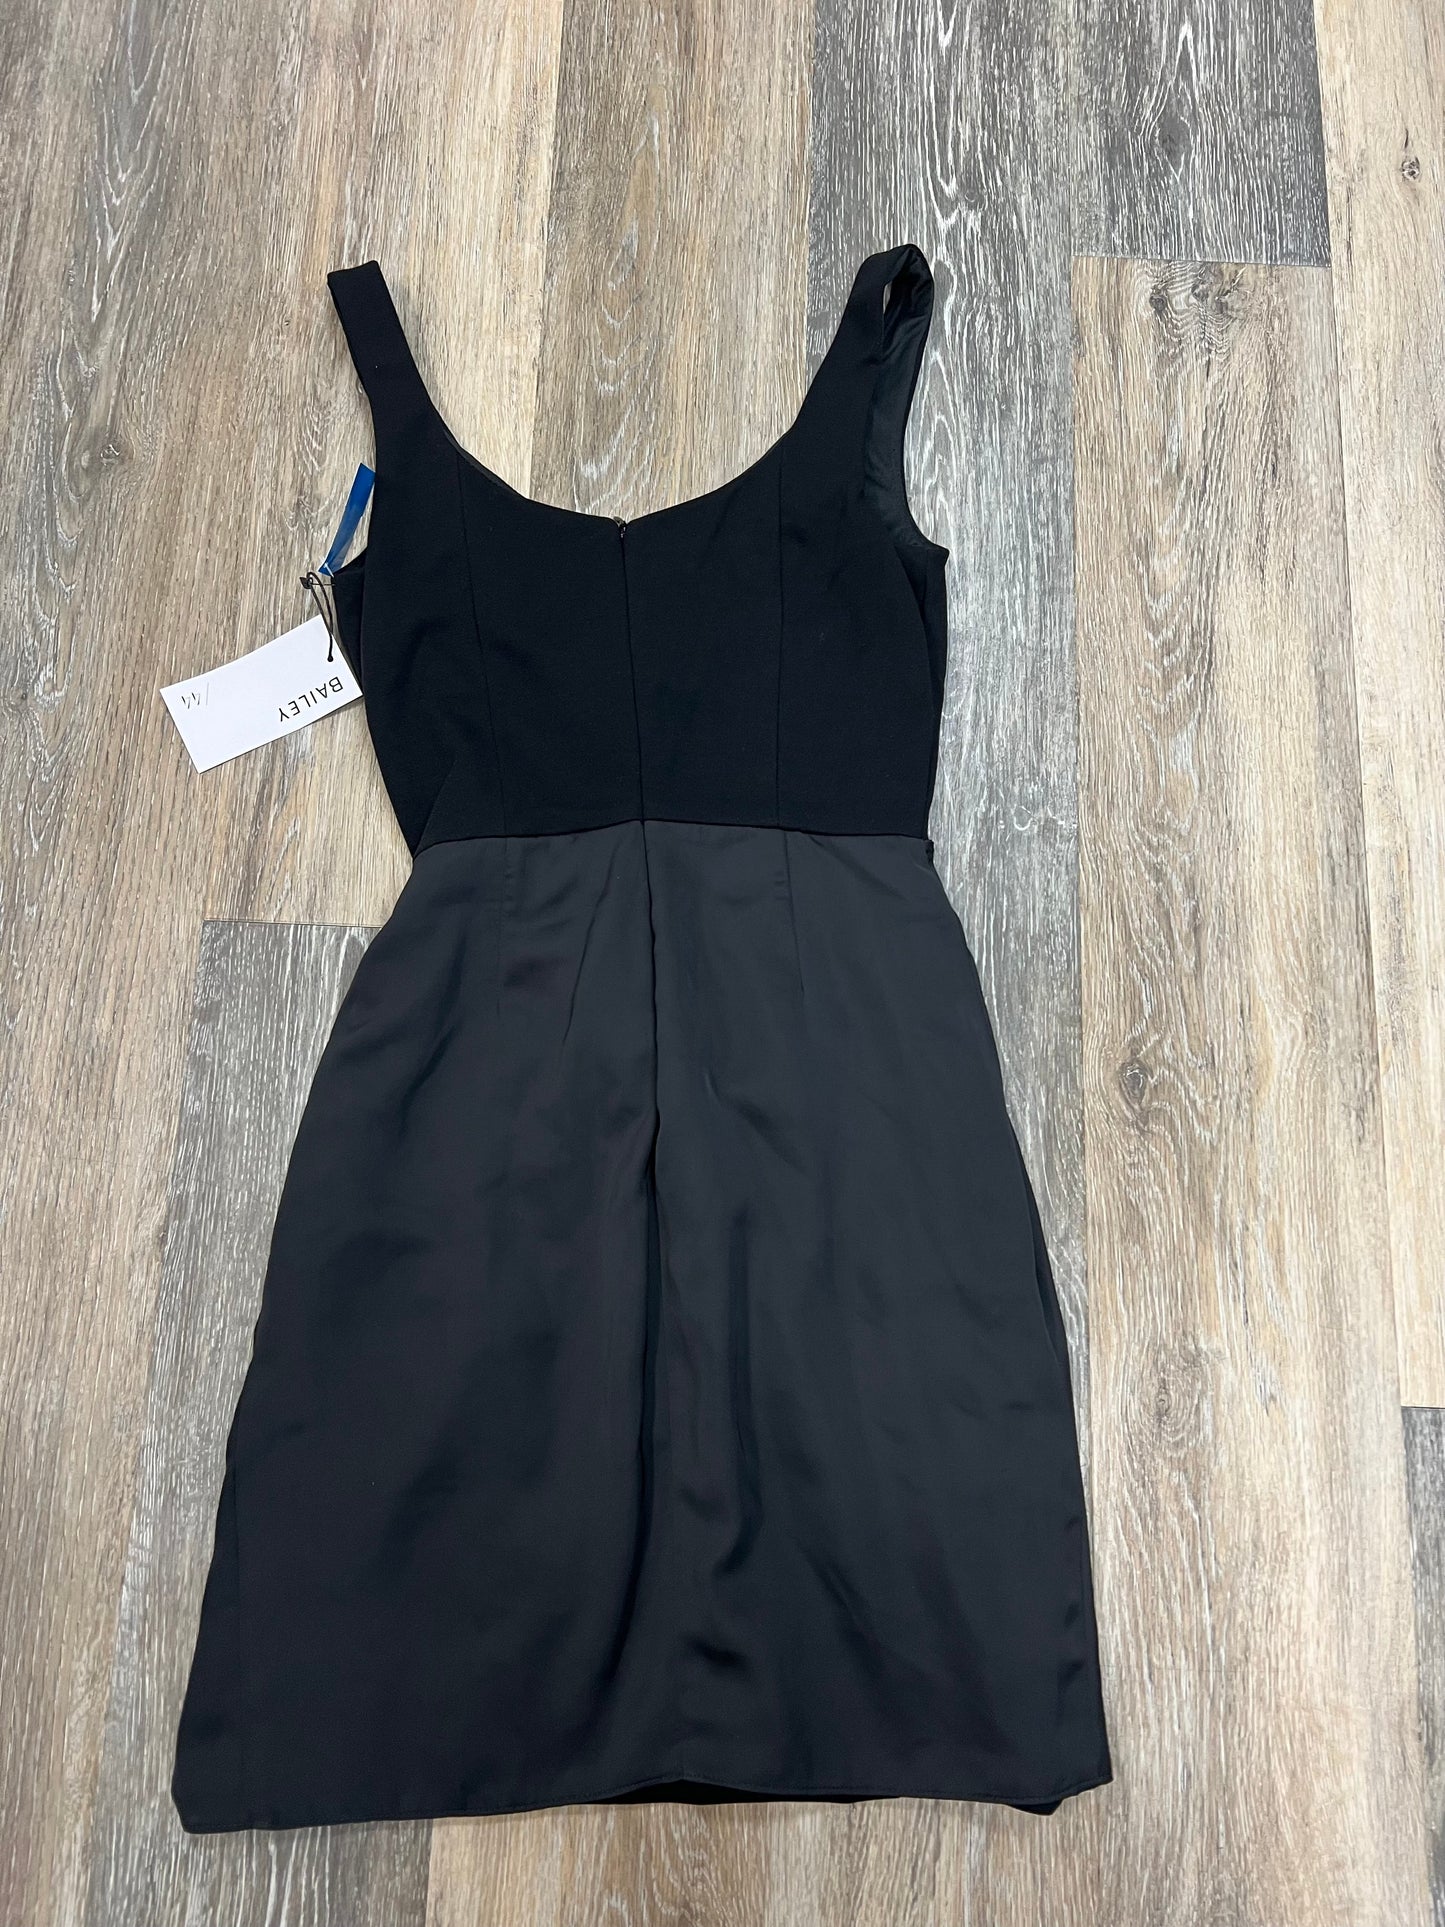 Black Dress Casual Short Bailey 44, Size Xs